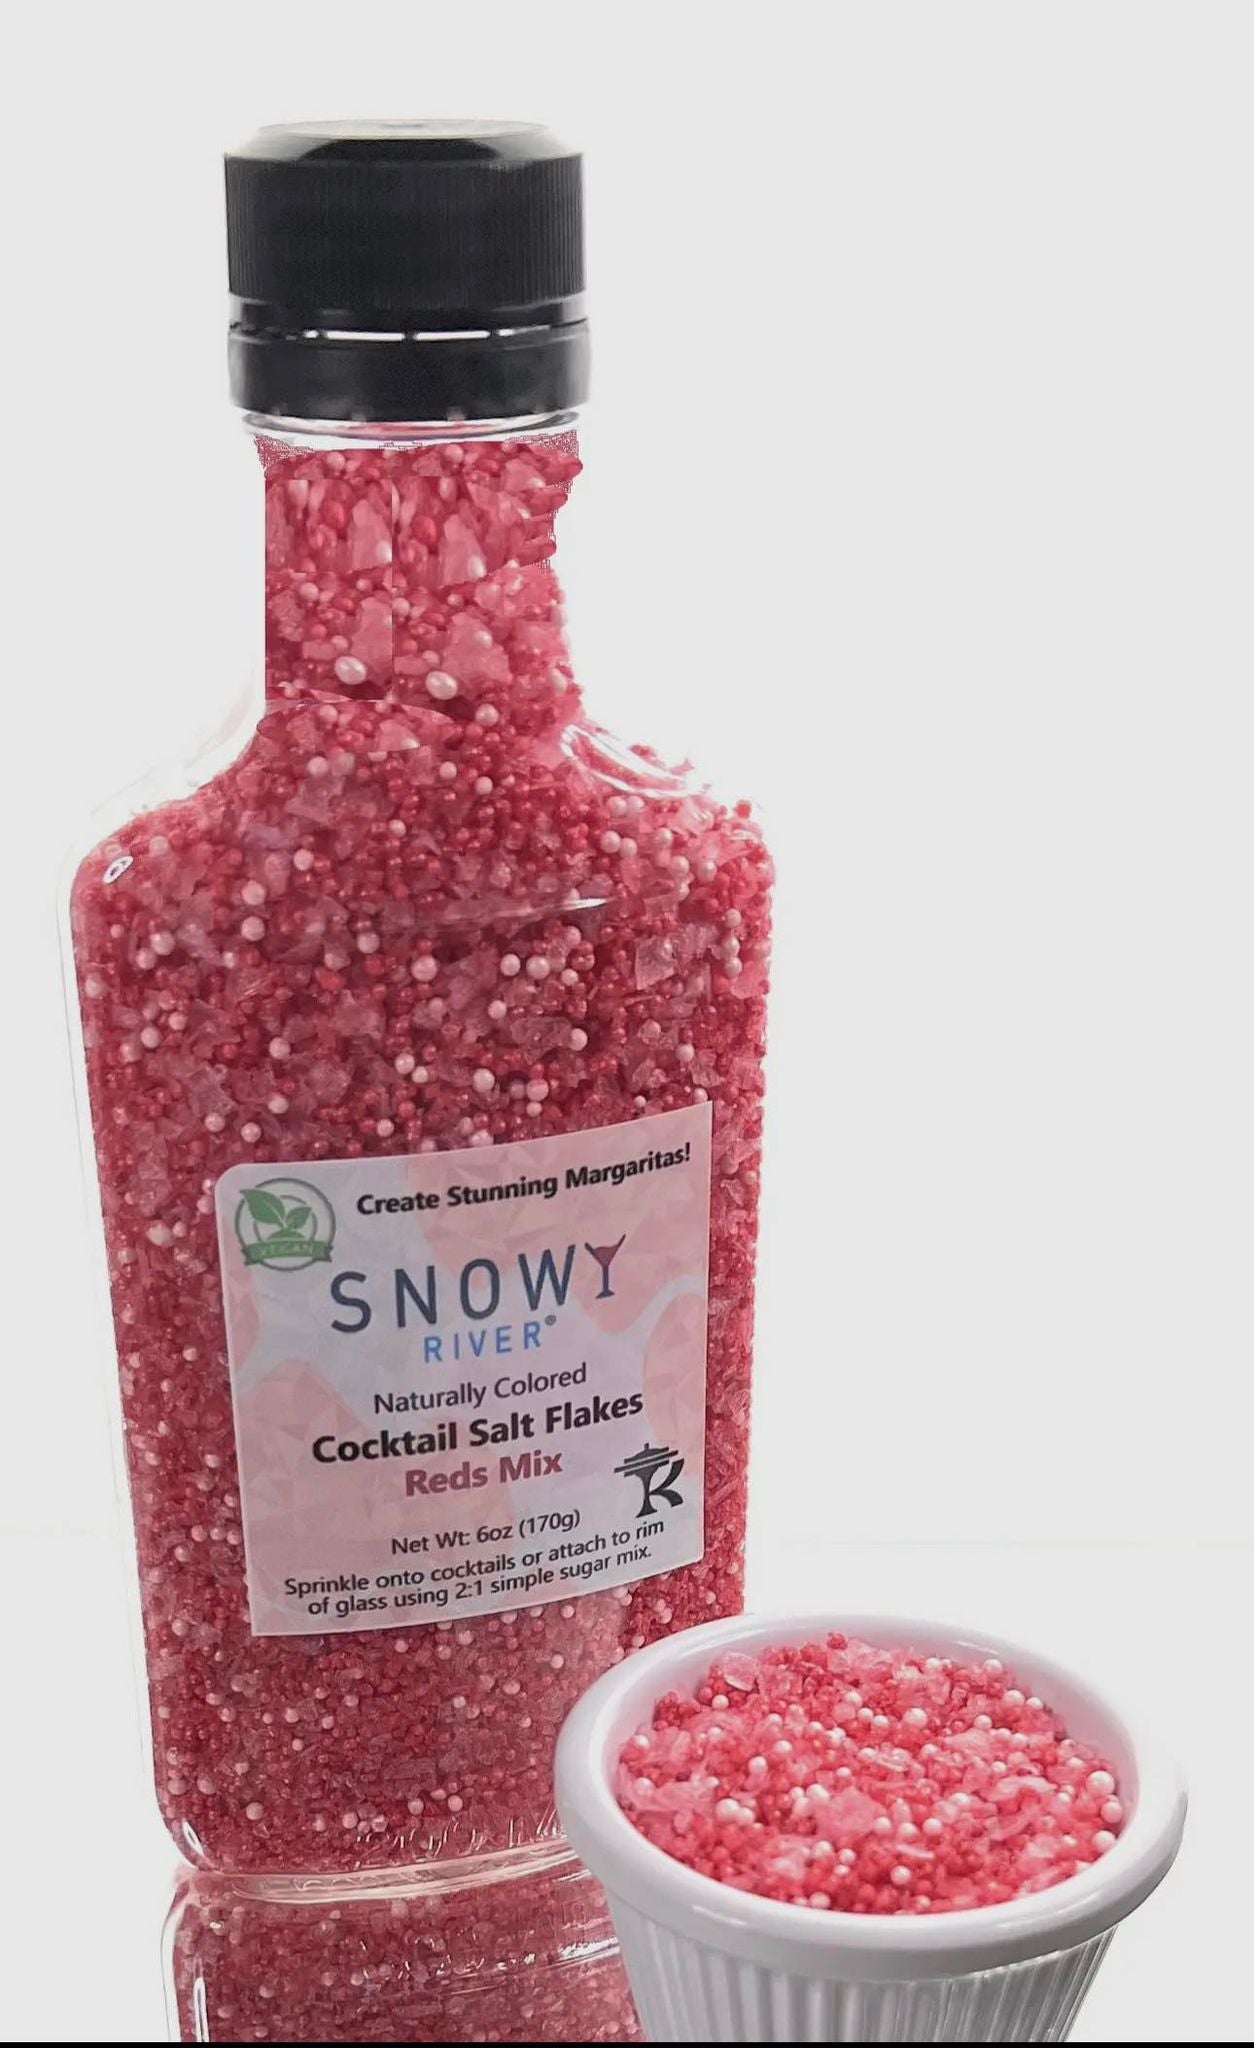 Snowy River Cocktail Salt Flakes